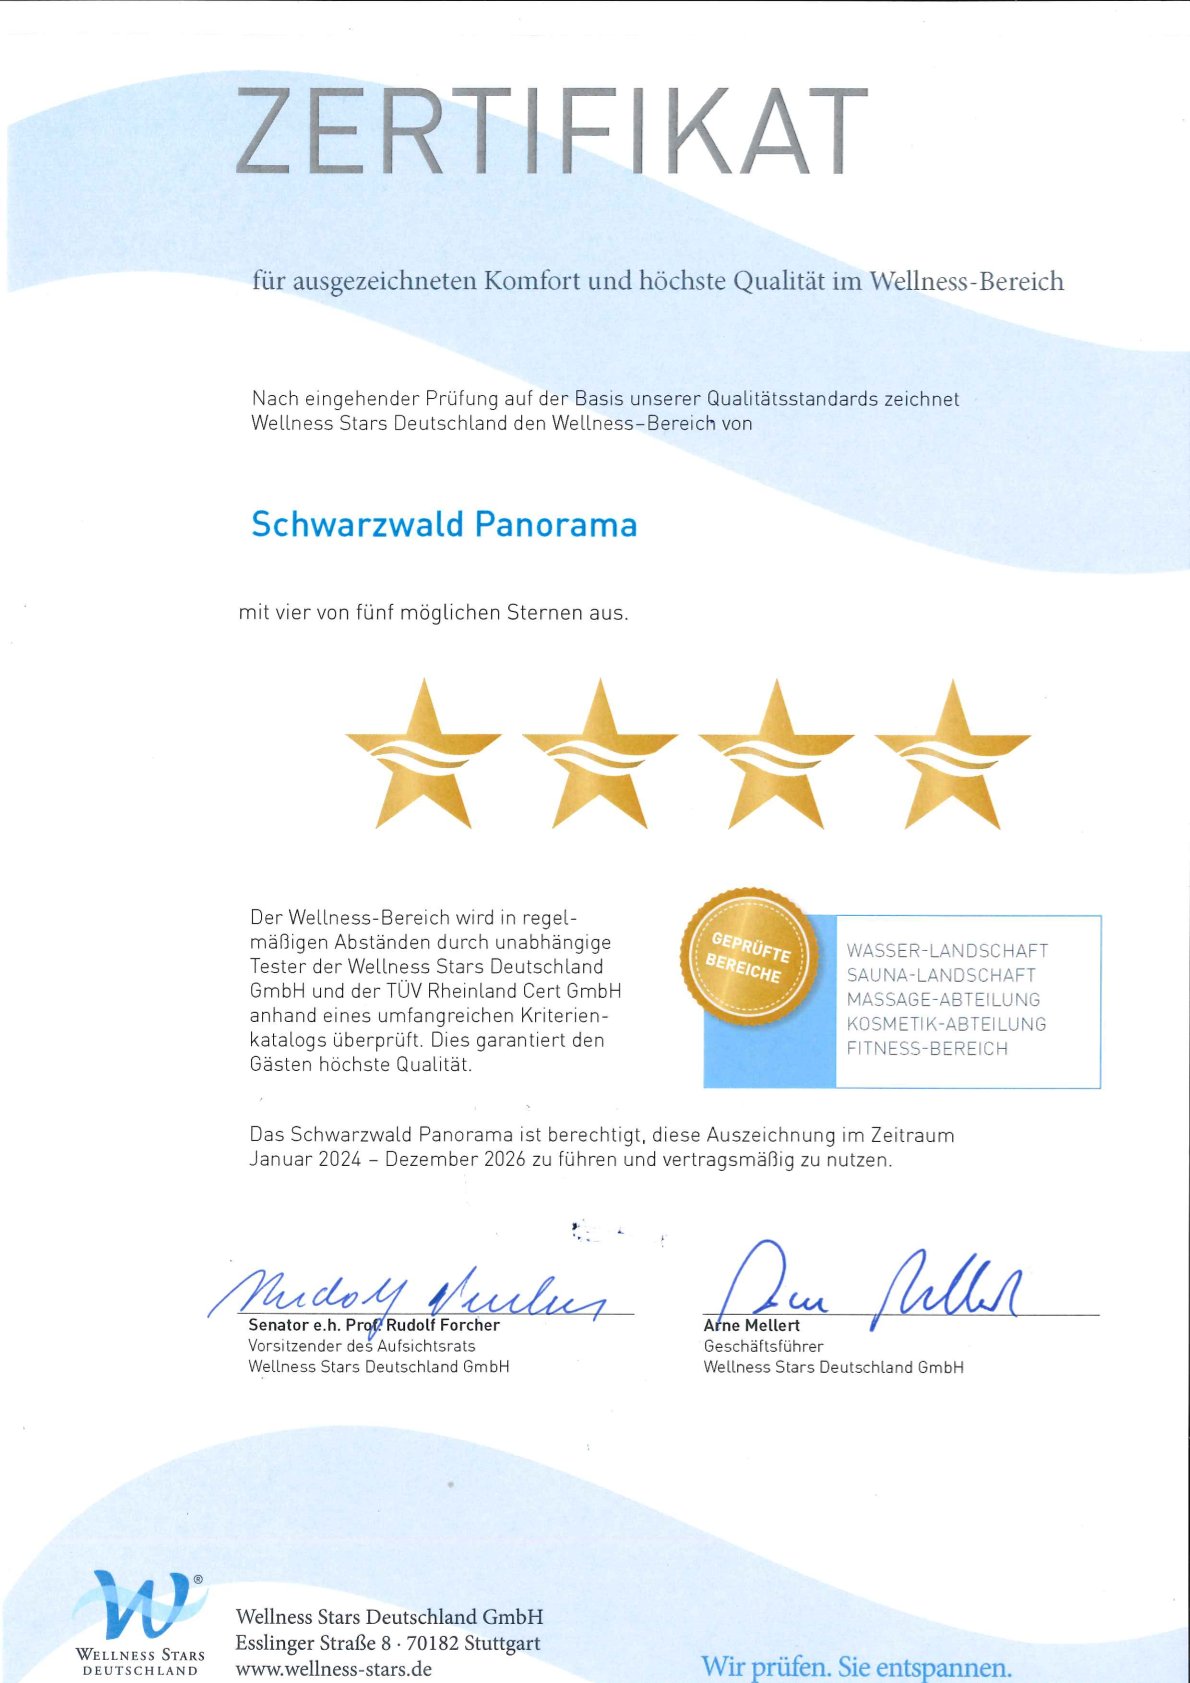 Zertifikat Wellness Stars GmbH 2014